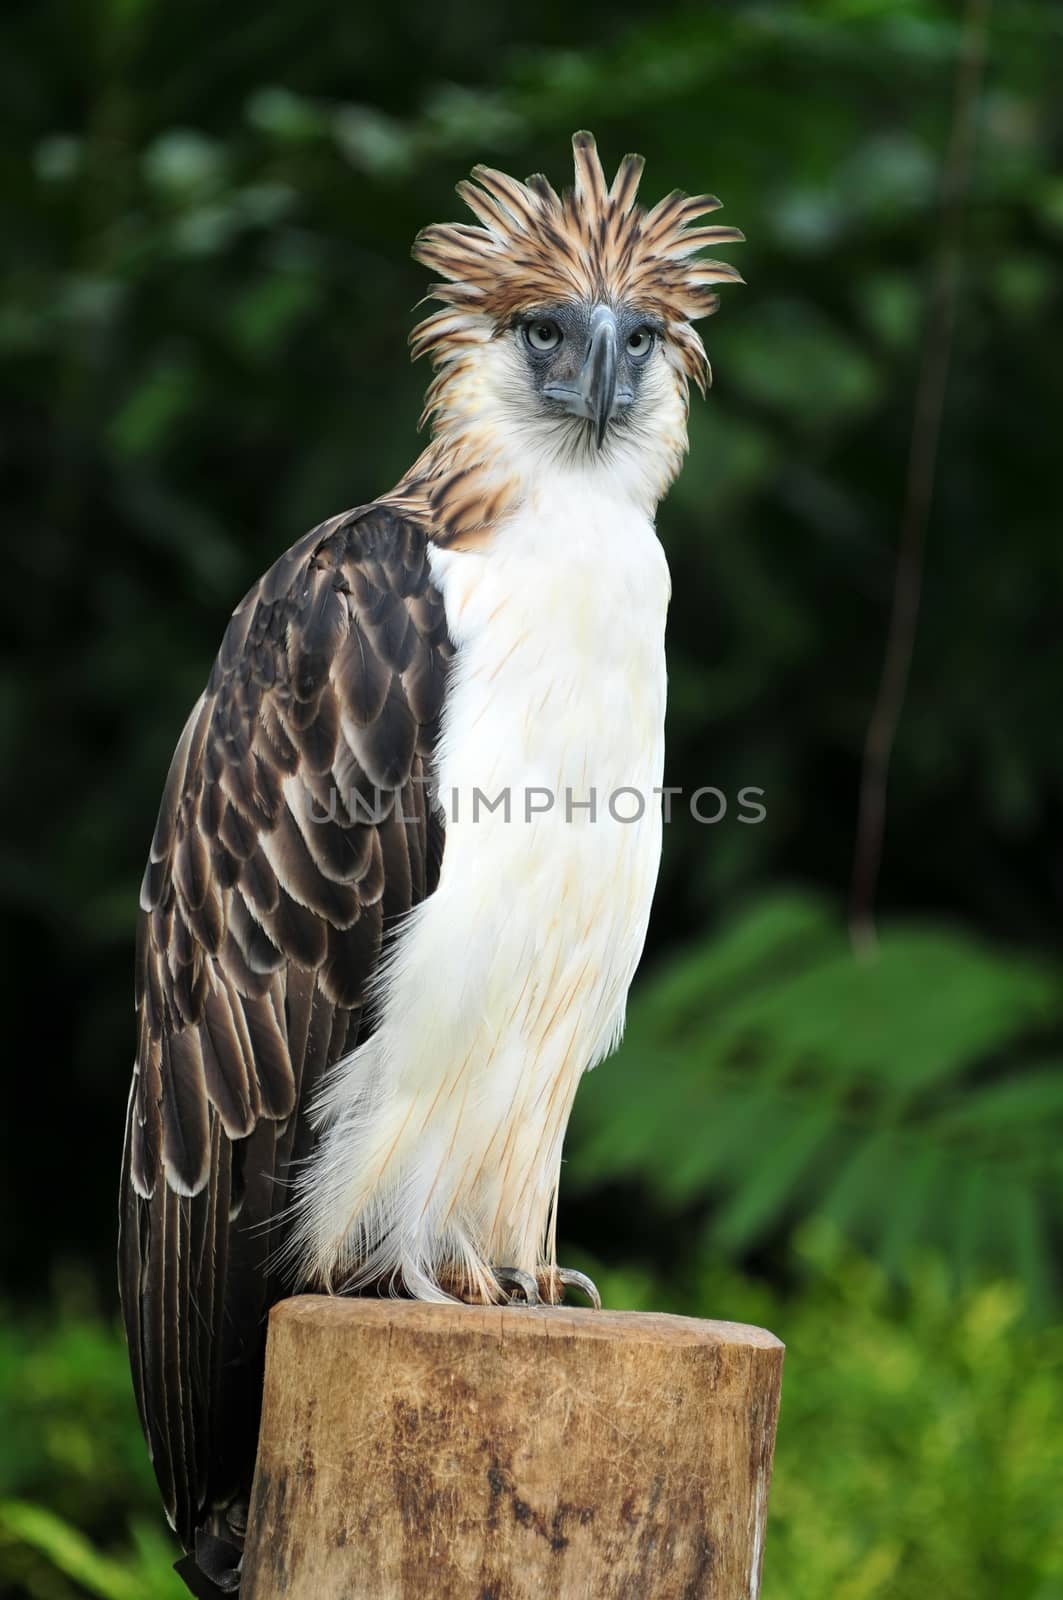 Philippine Eagle by igorot